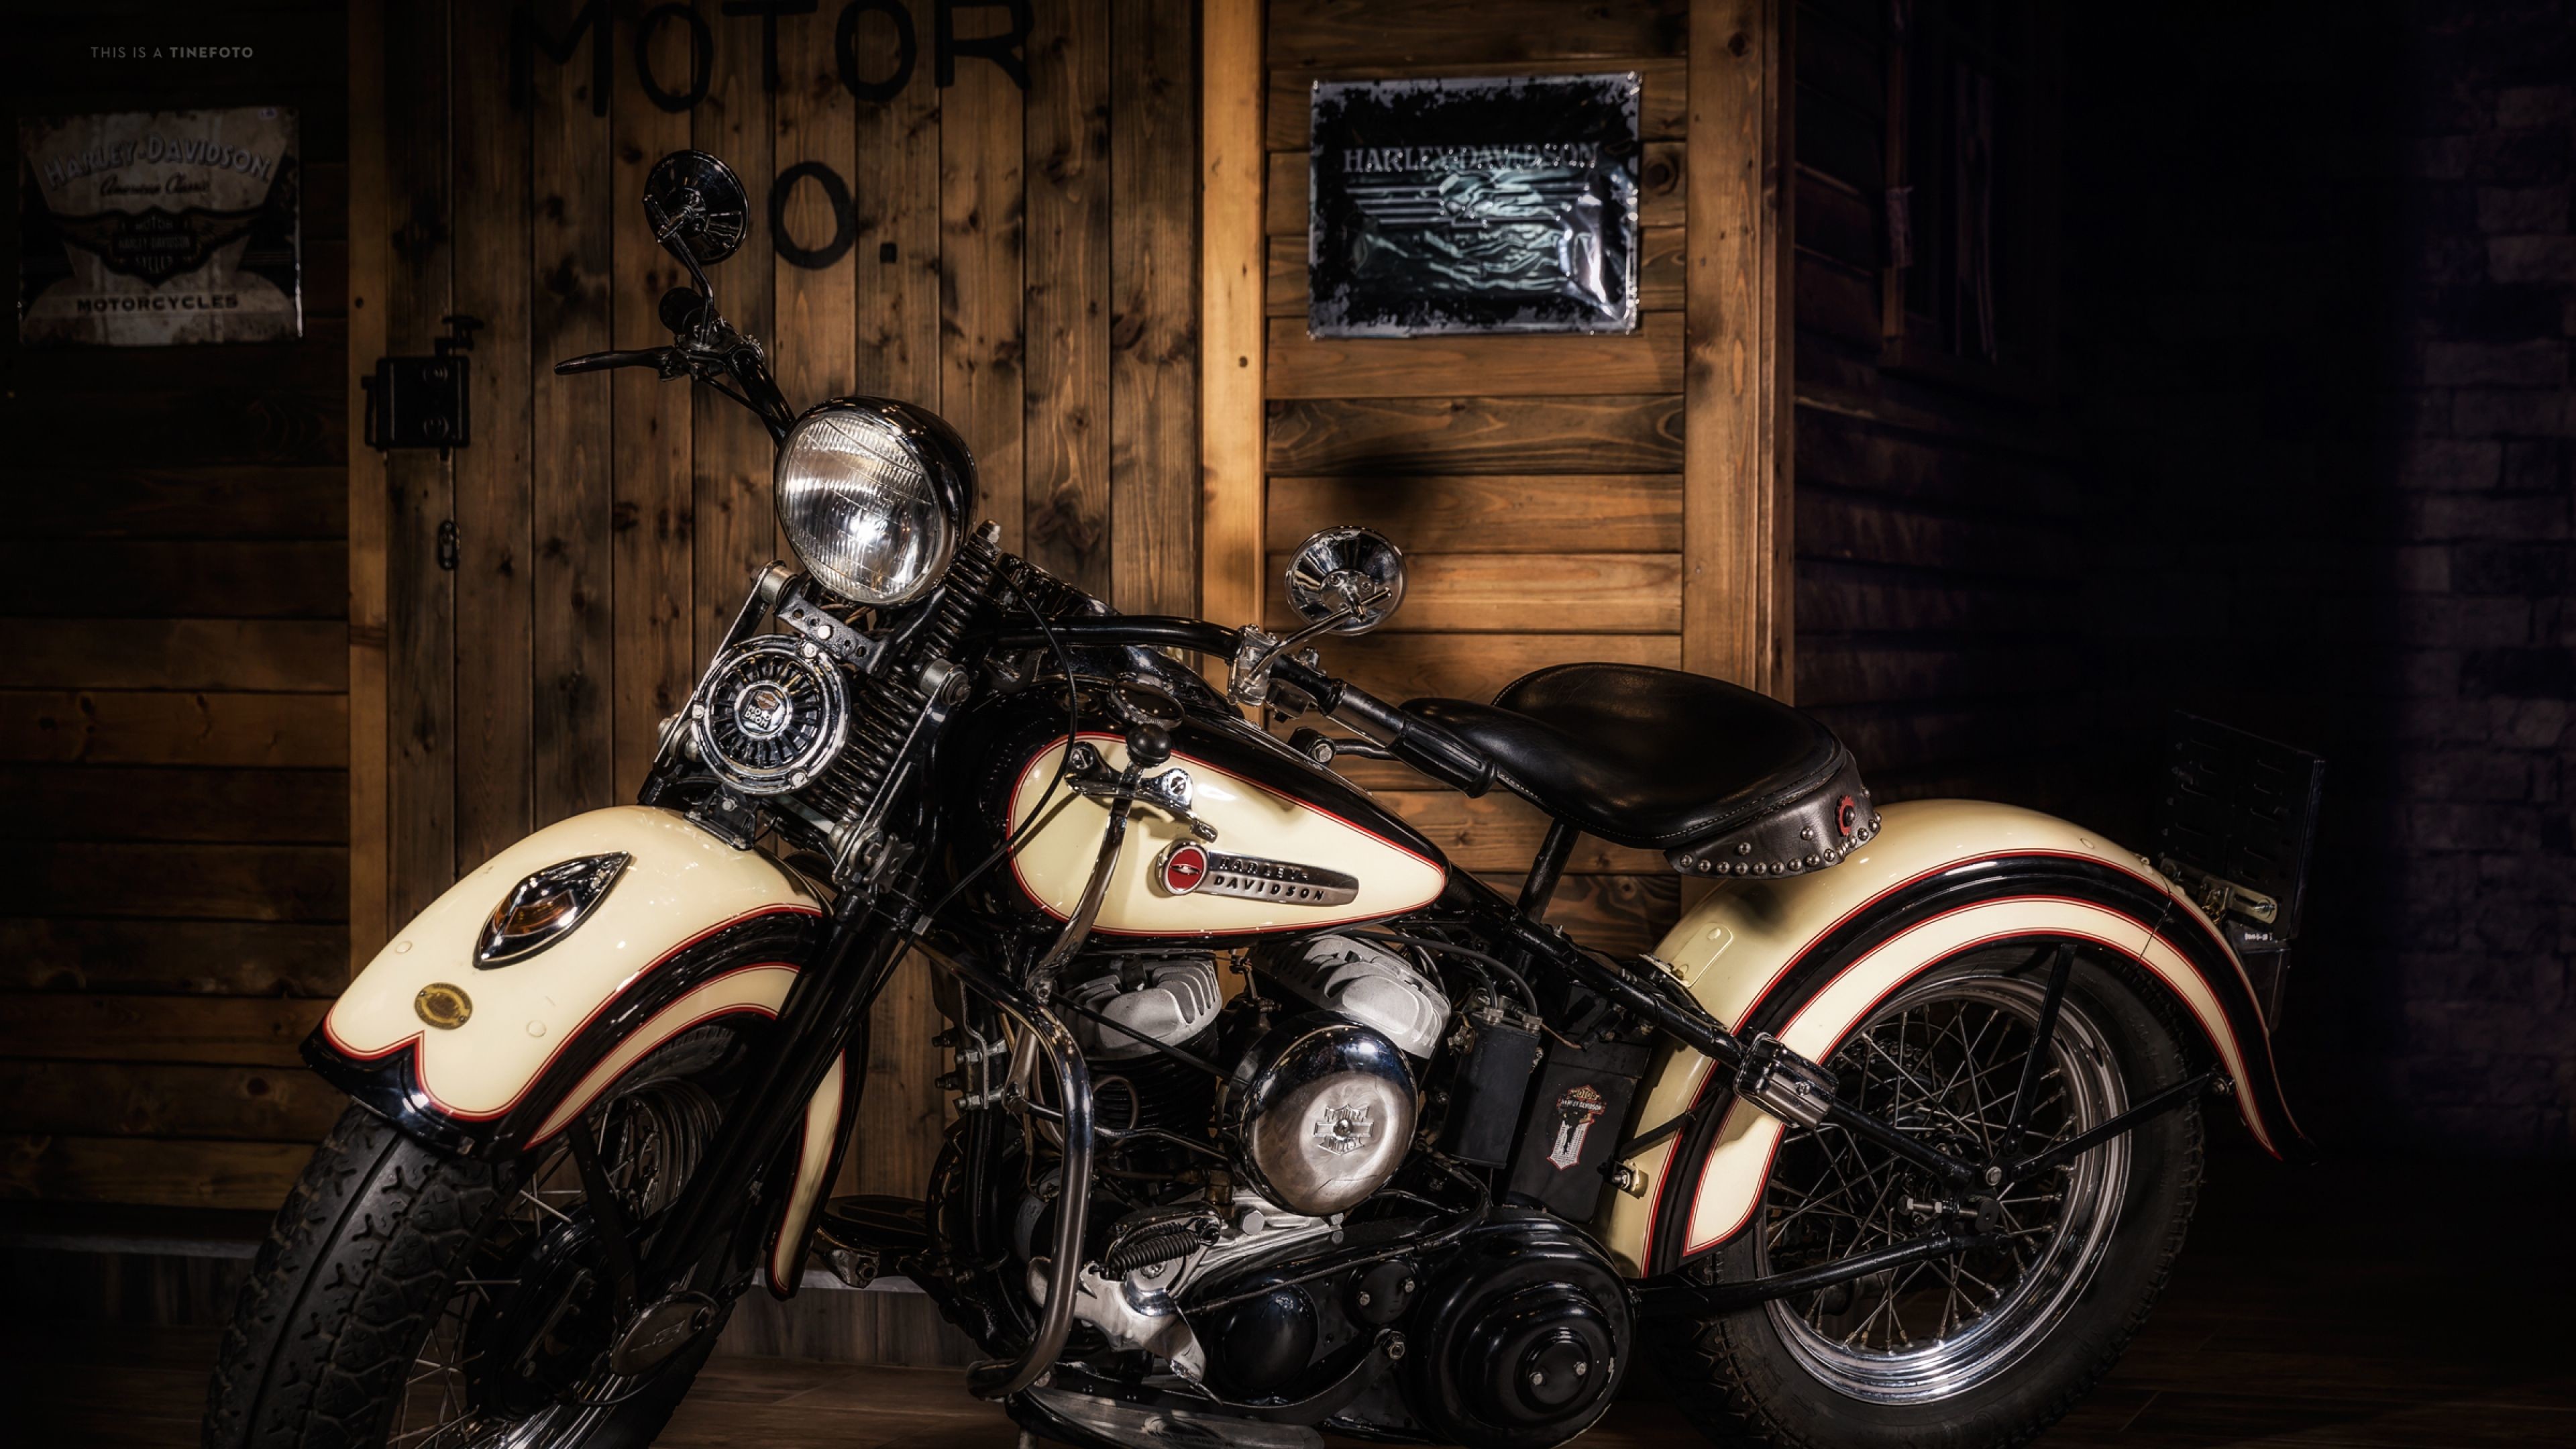 3840x2160 4K Ultra HD Harley davidson Wallpapers HD, Desktop Backgrounds .